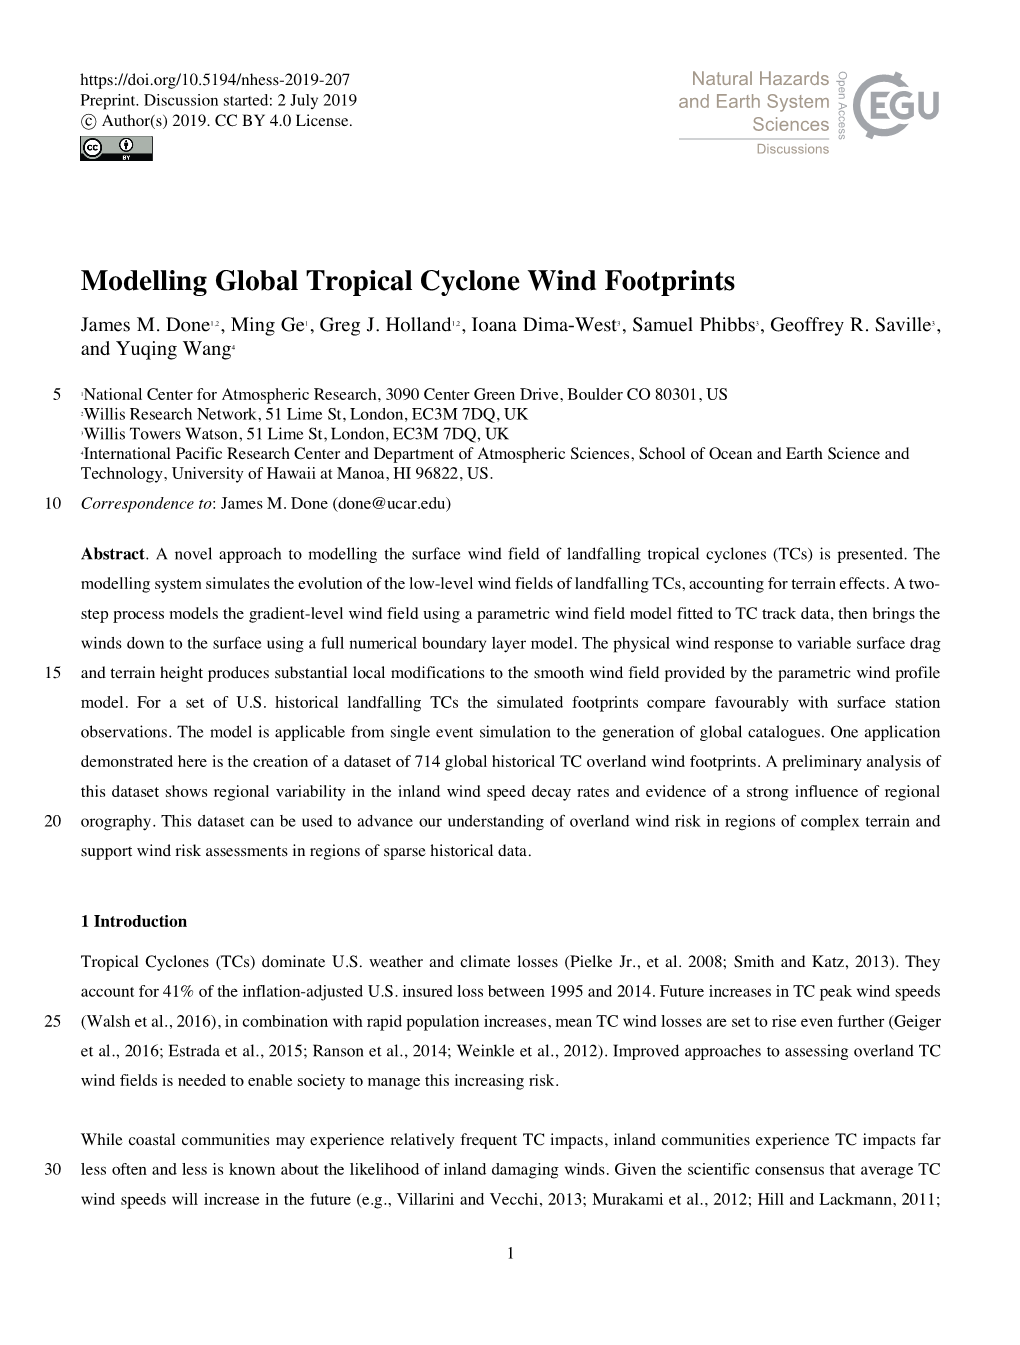 Modelling Global Tropical Cyclone Wind Footprints